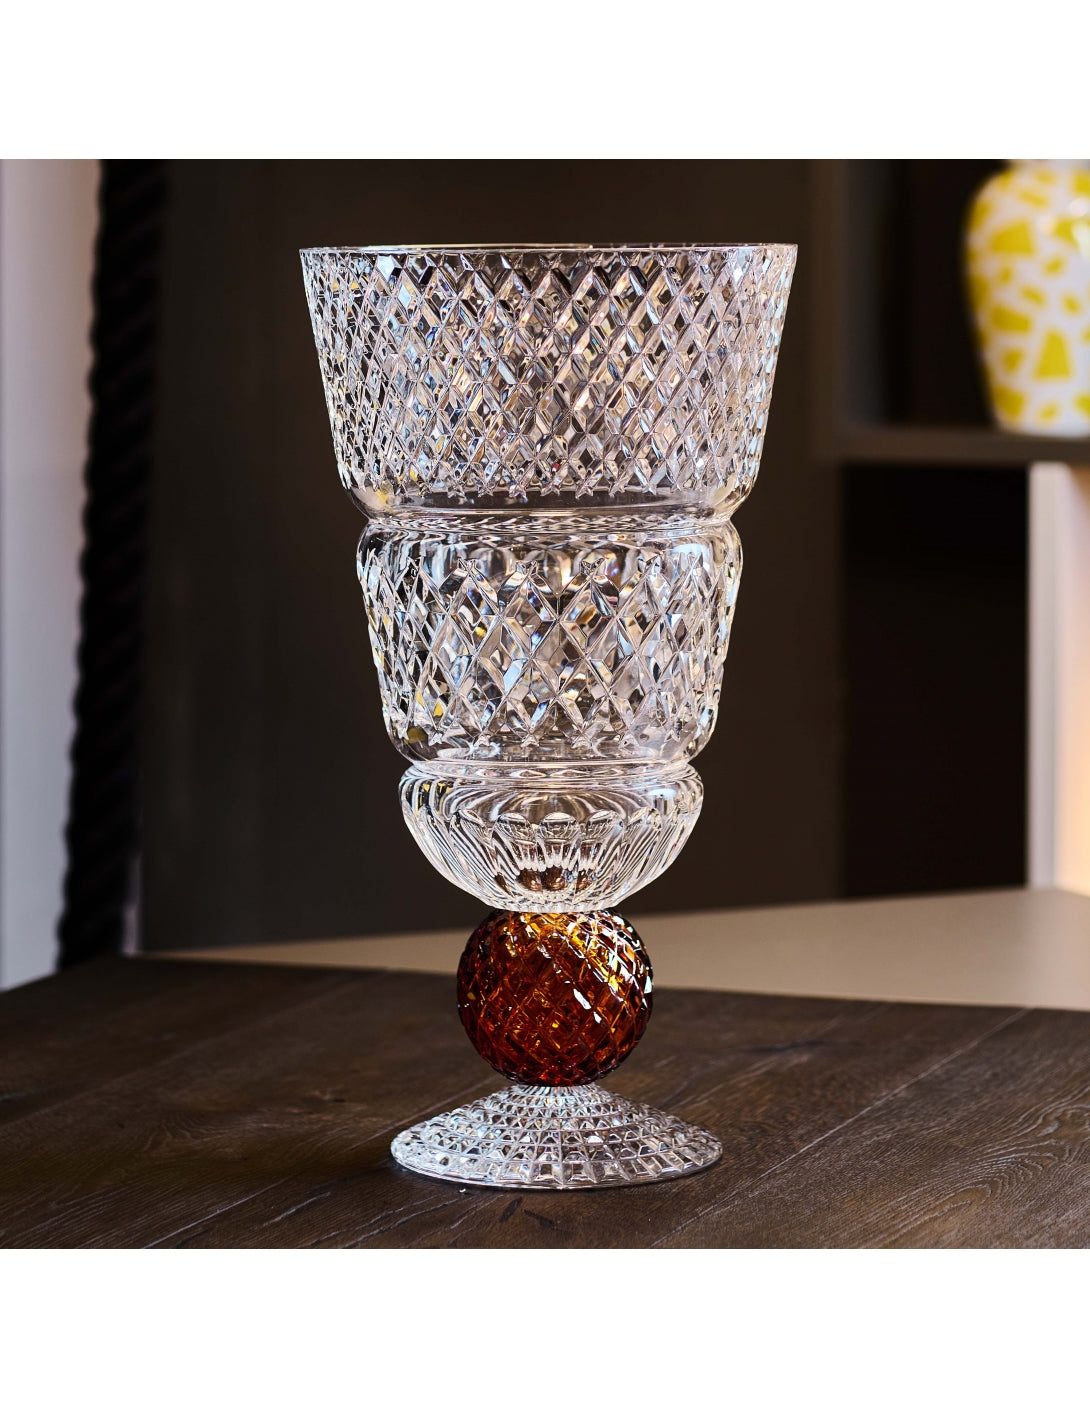 Katherina collection, conical medium vase